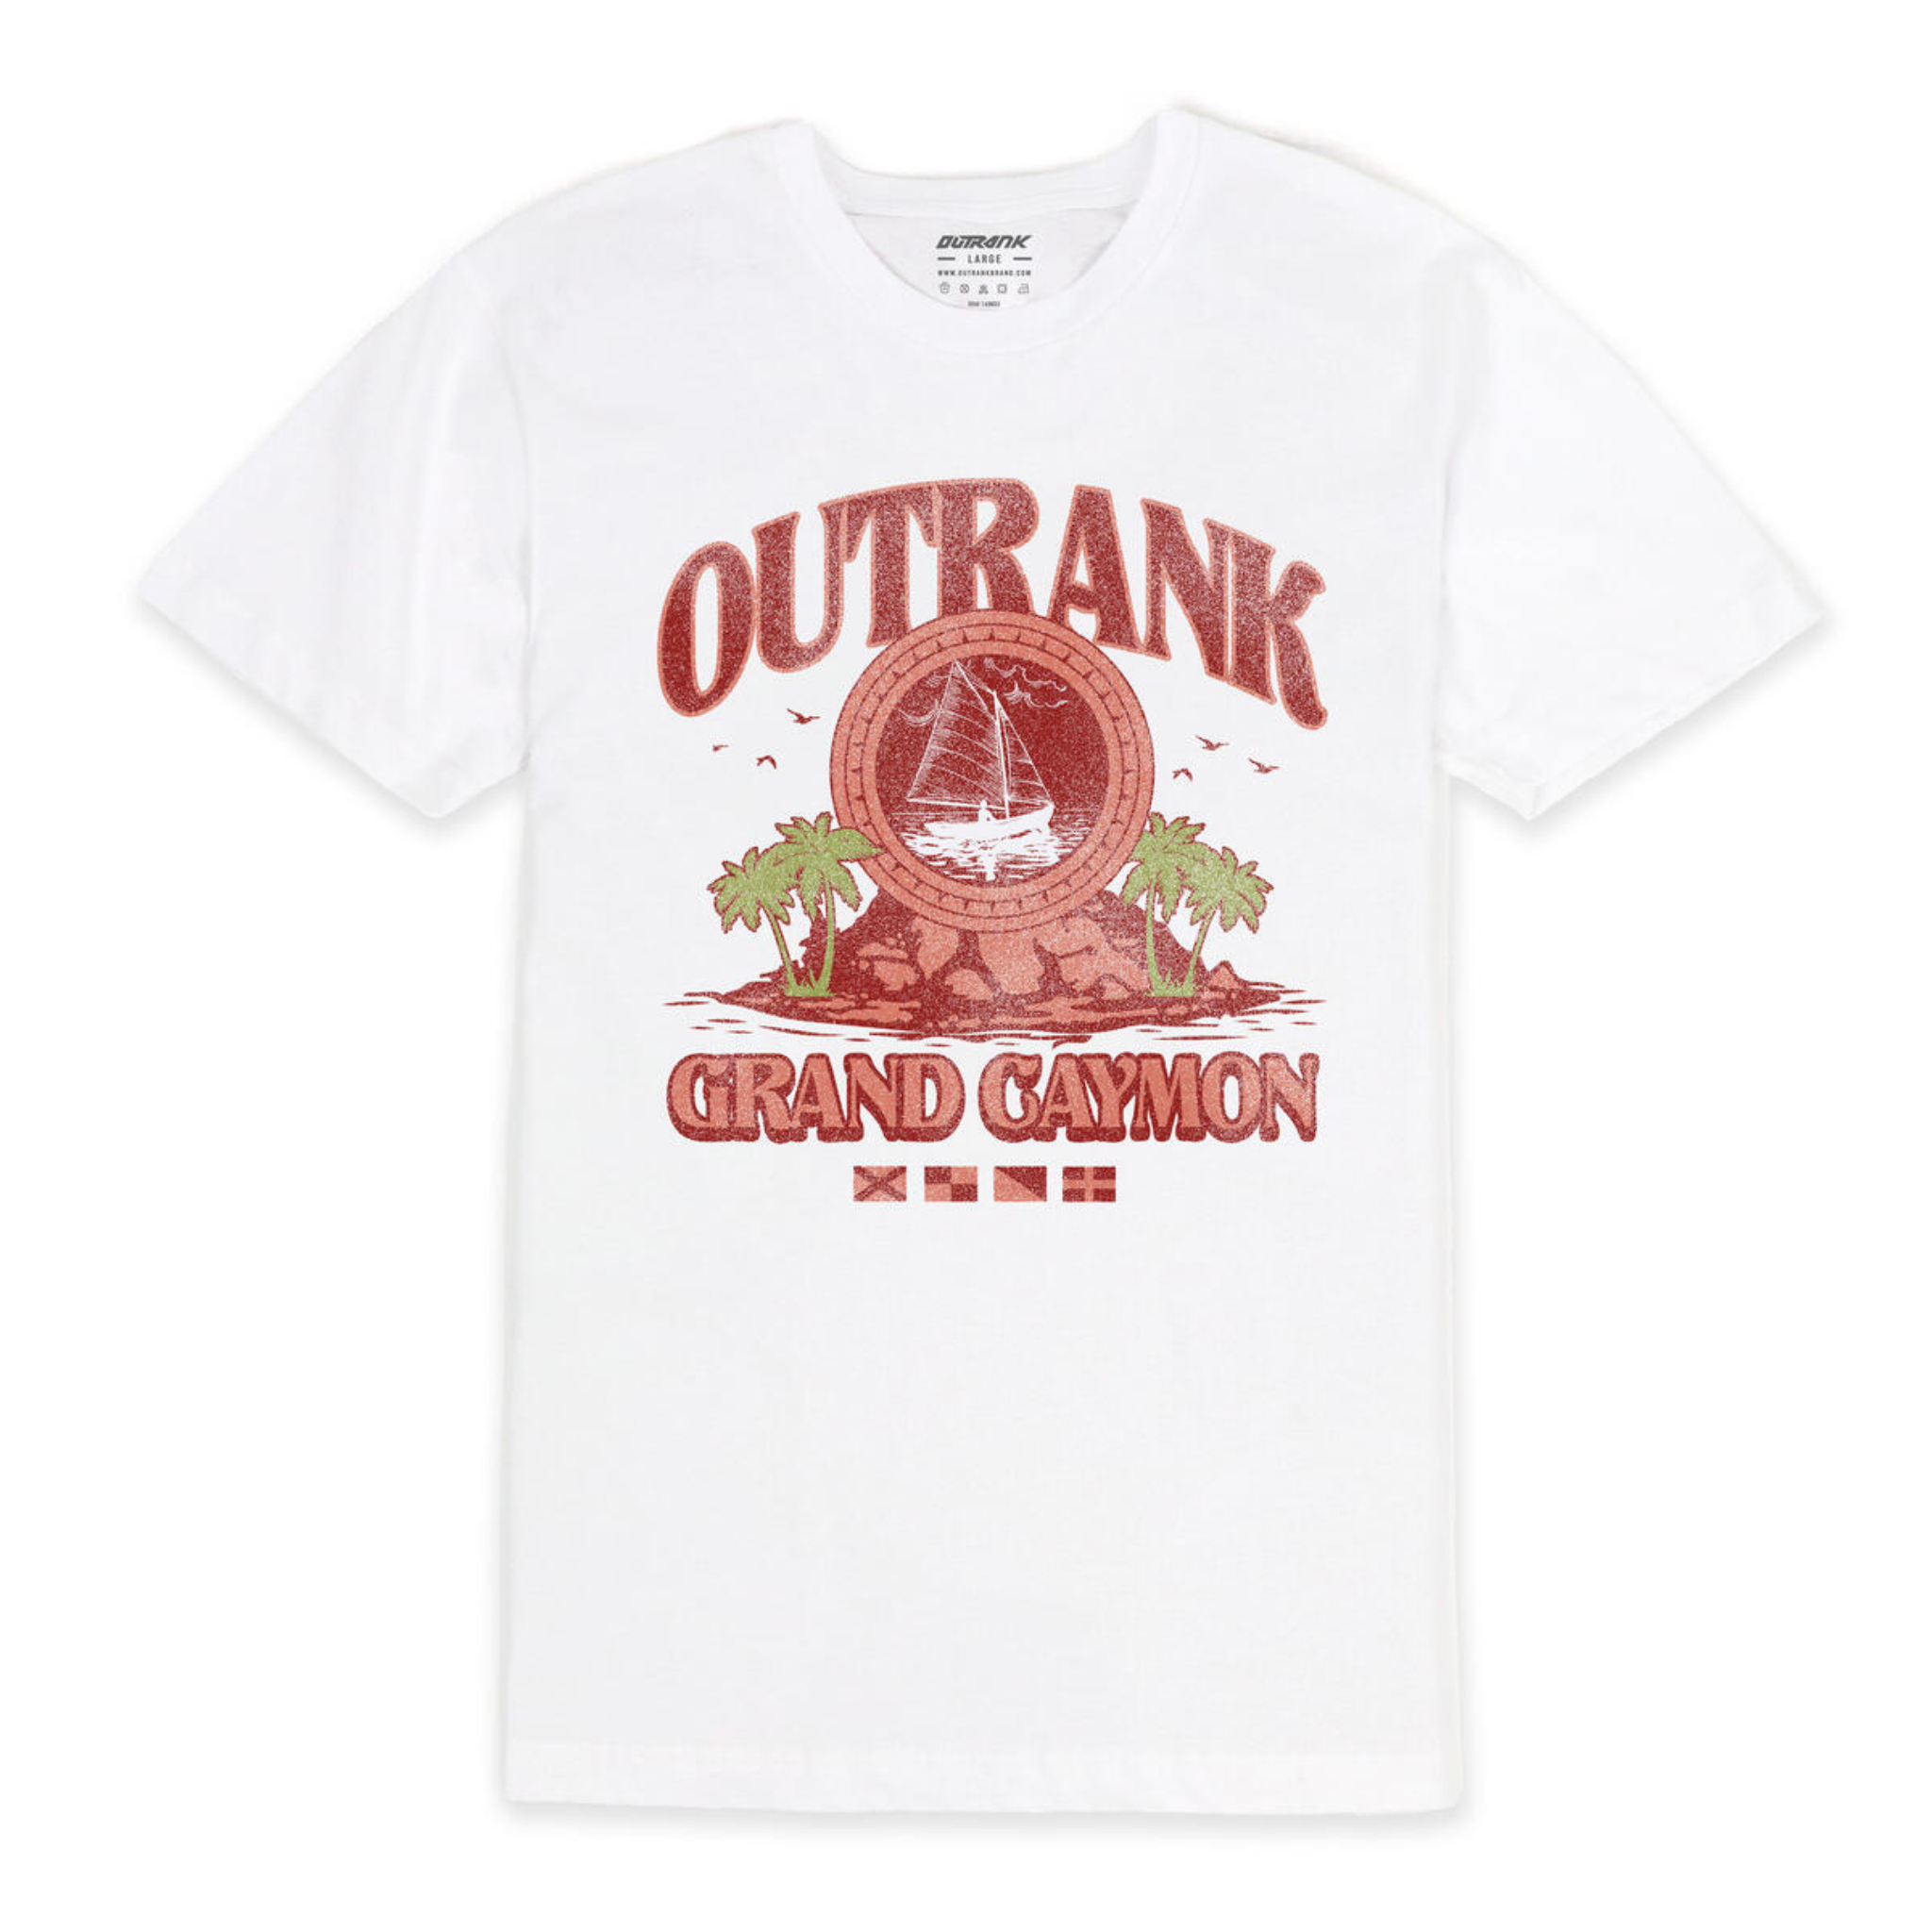 Outrank Grand Cayman T-Shirt (White)